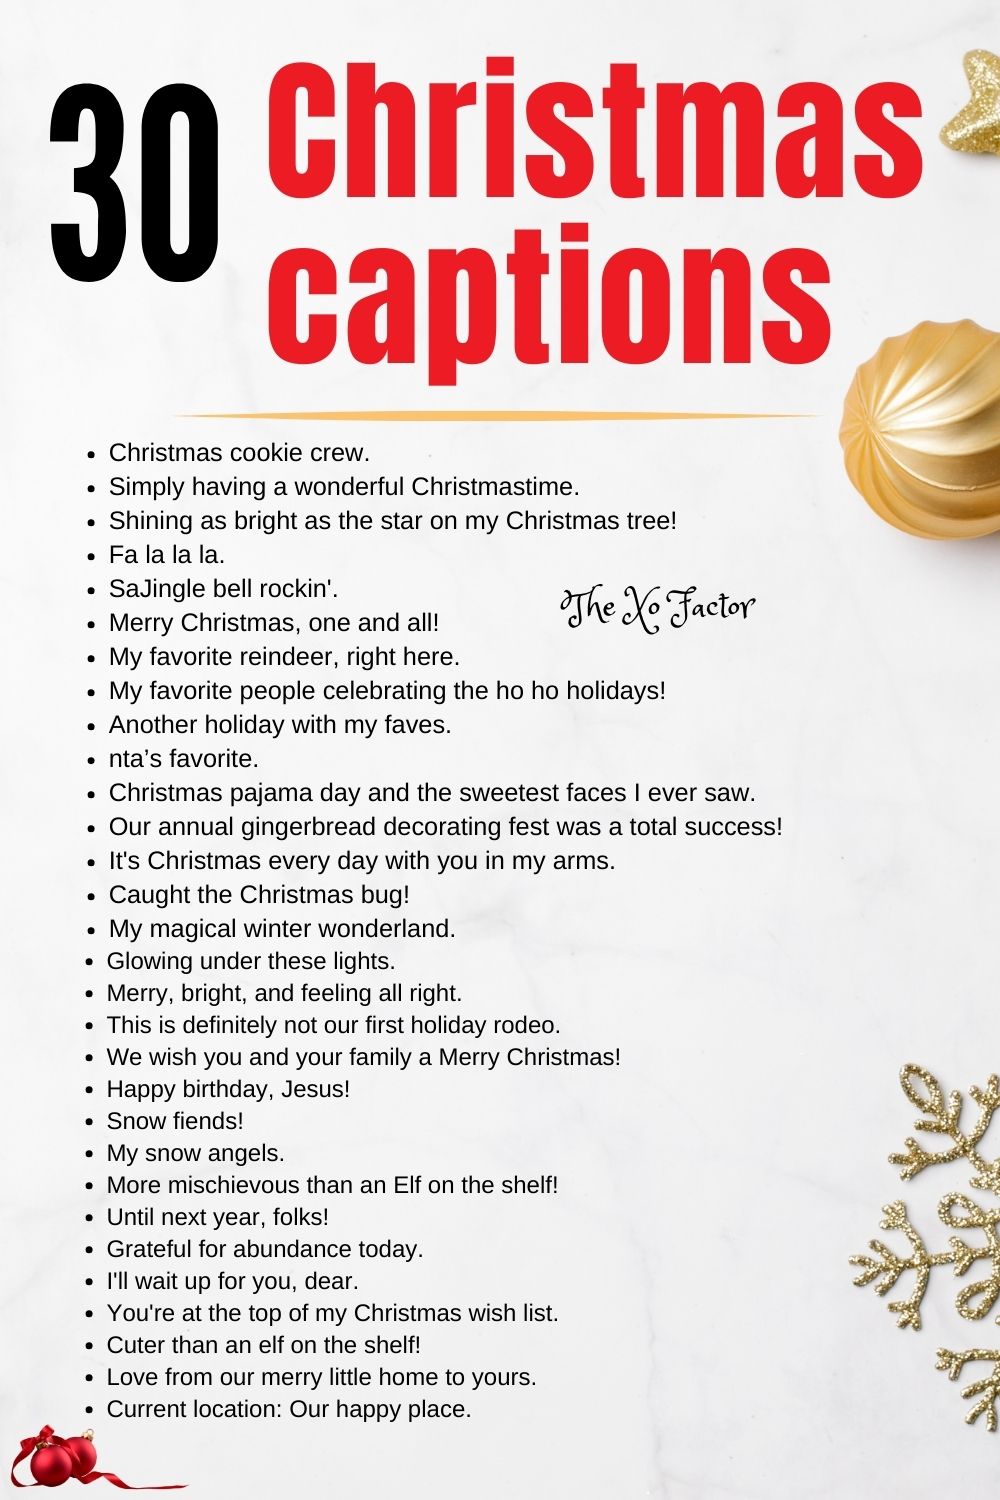 Christmas captions